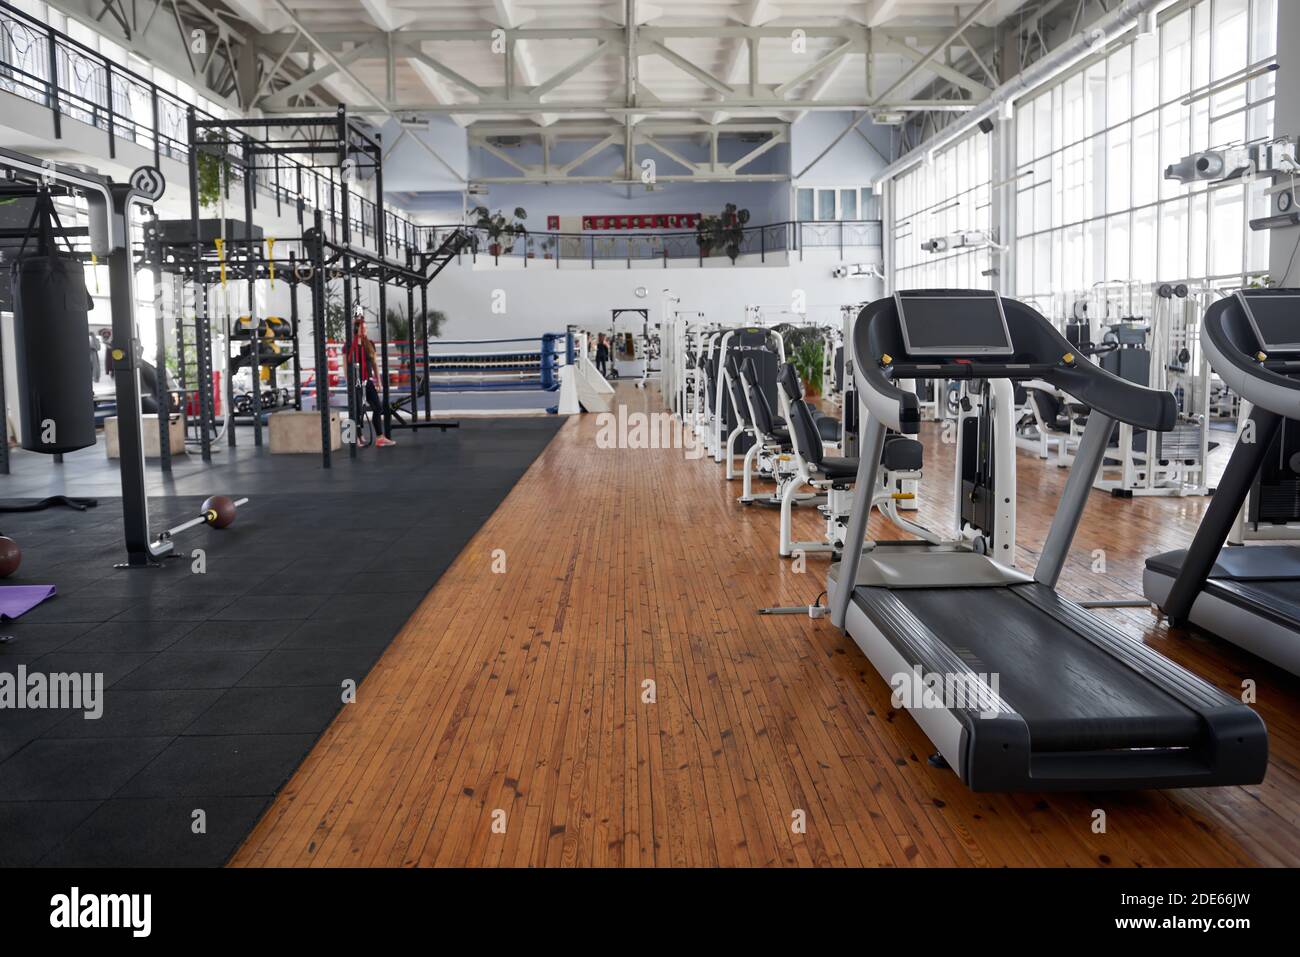 Gym interior with equipment. Stock Photo